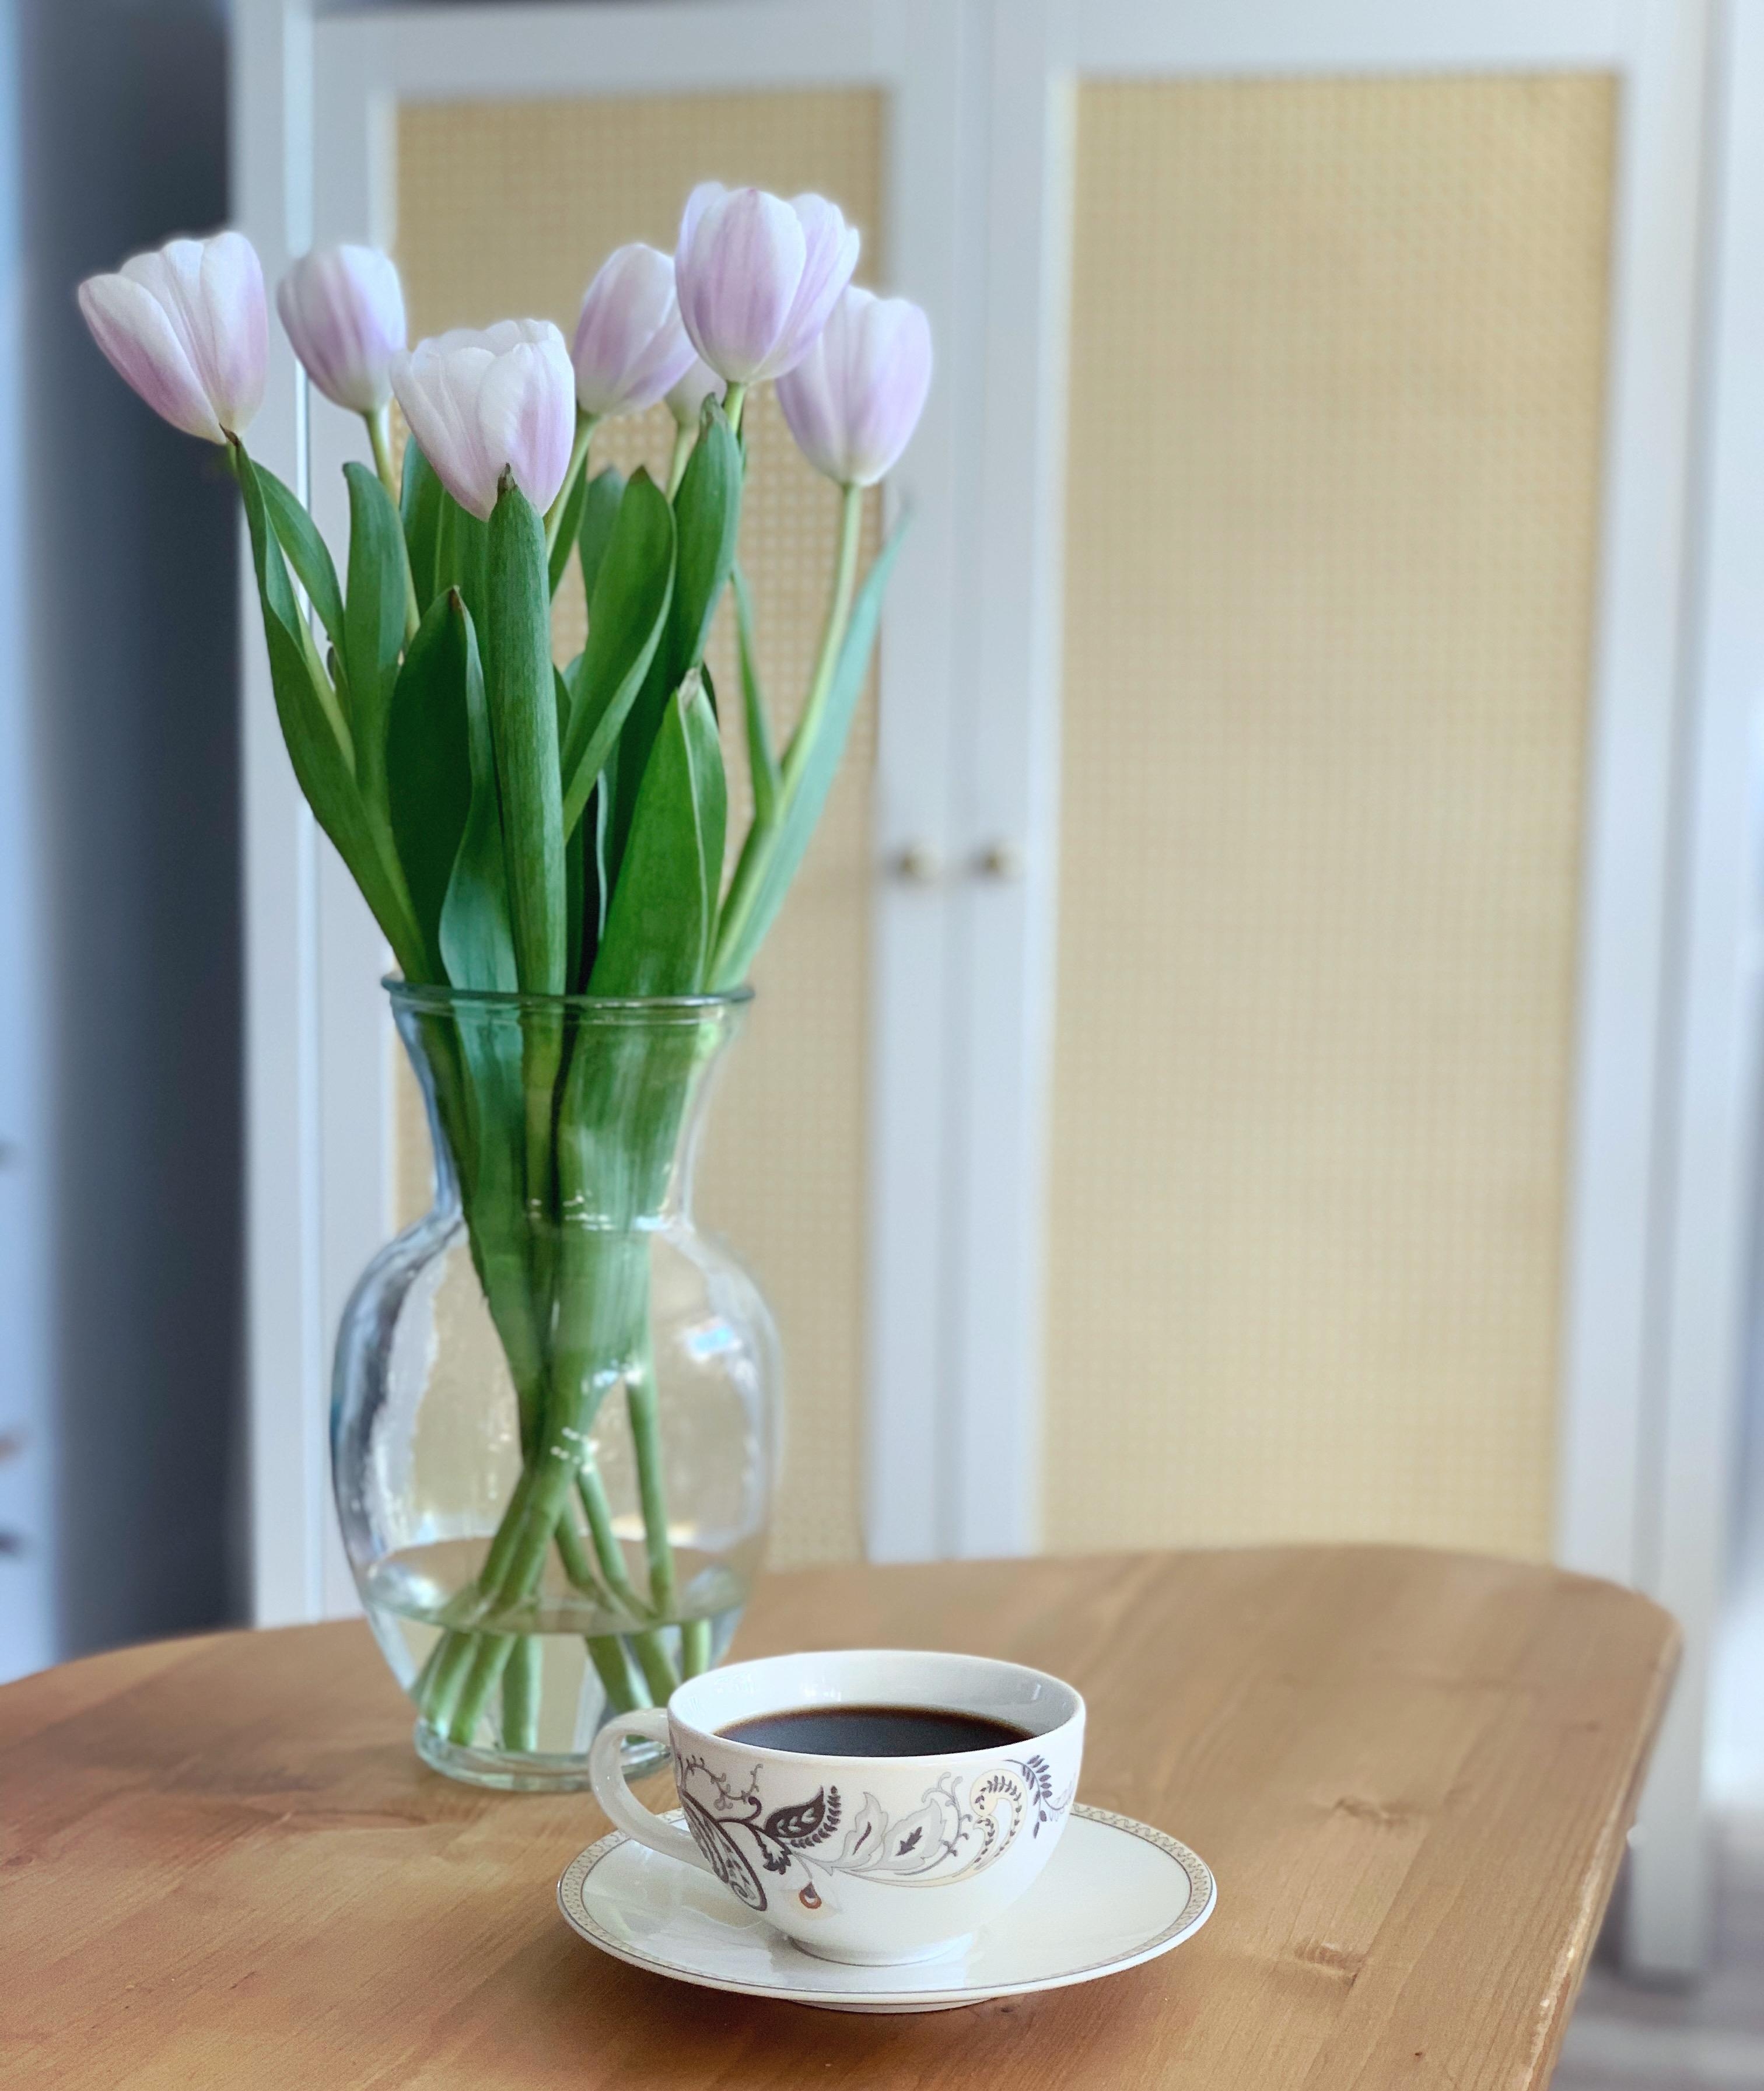 Kaffeezeit :) #tulpenliebe #kaffee